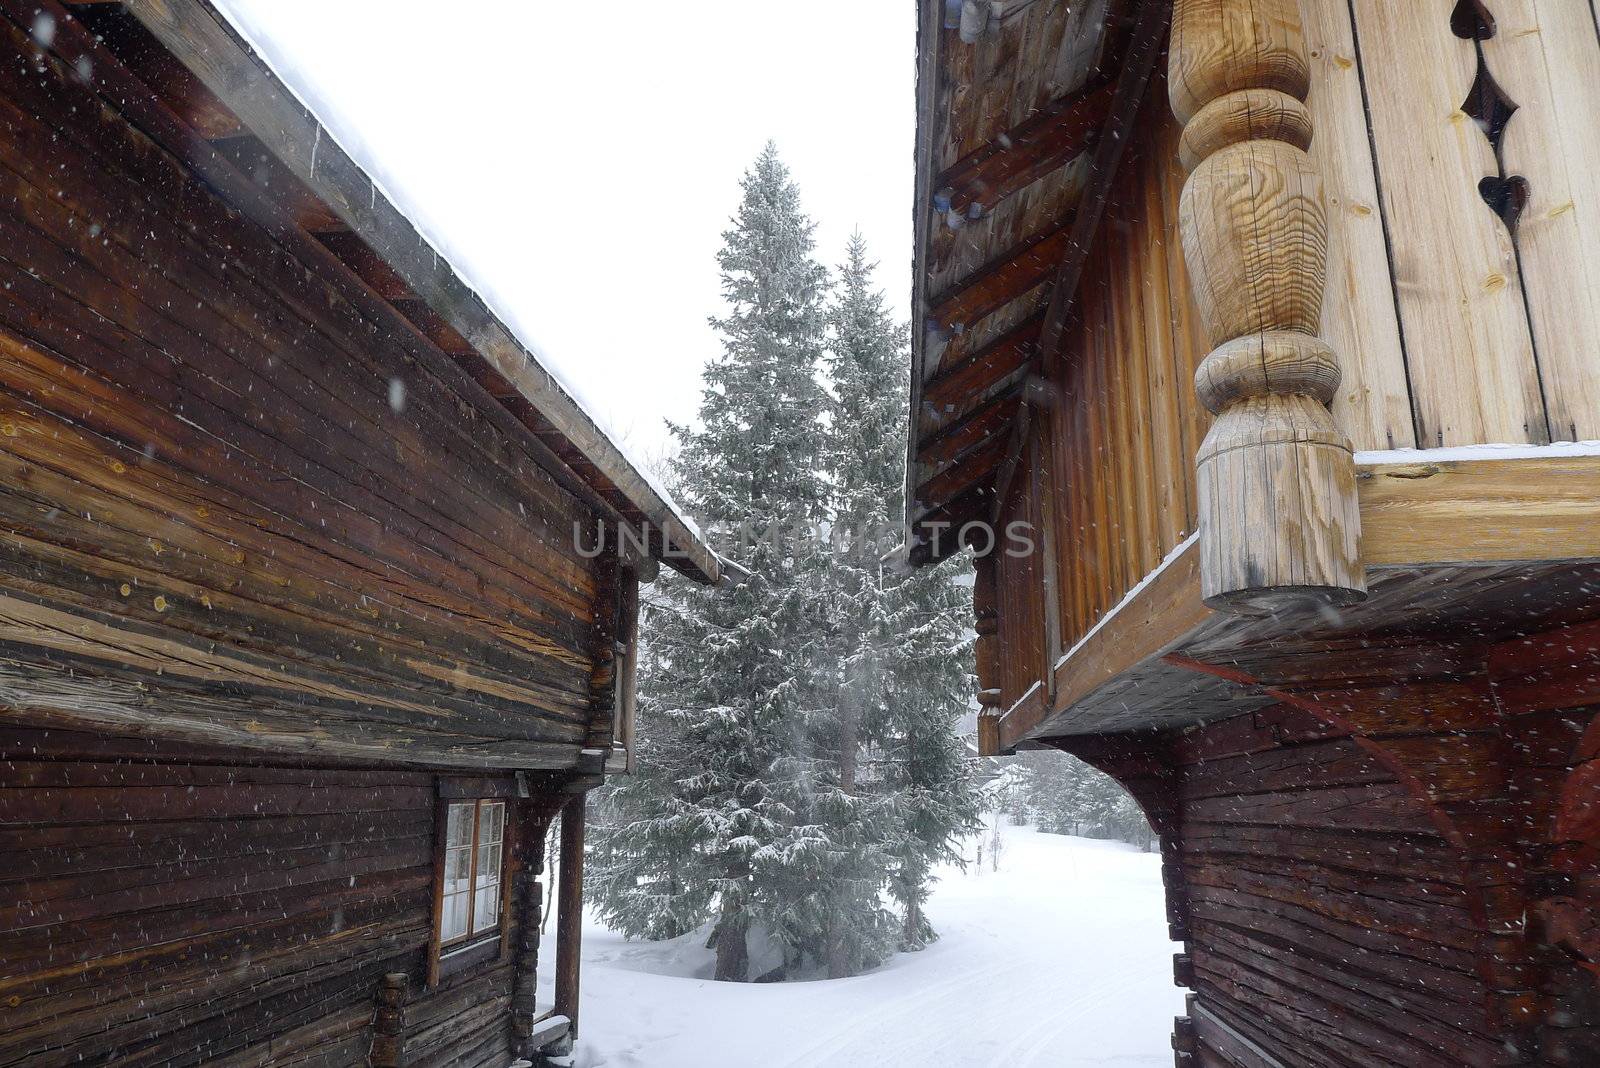 Winter cabins